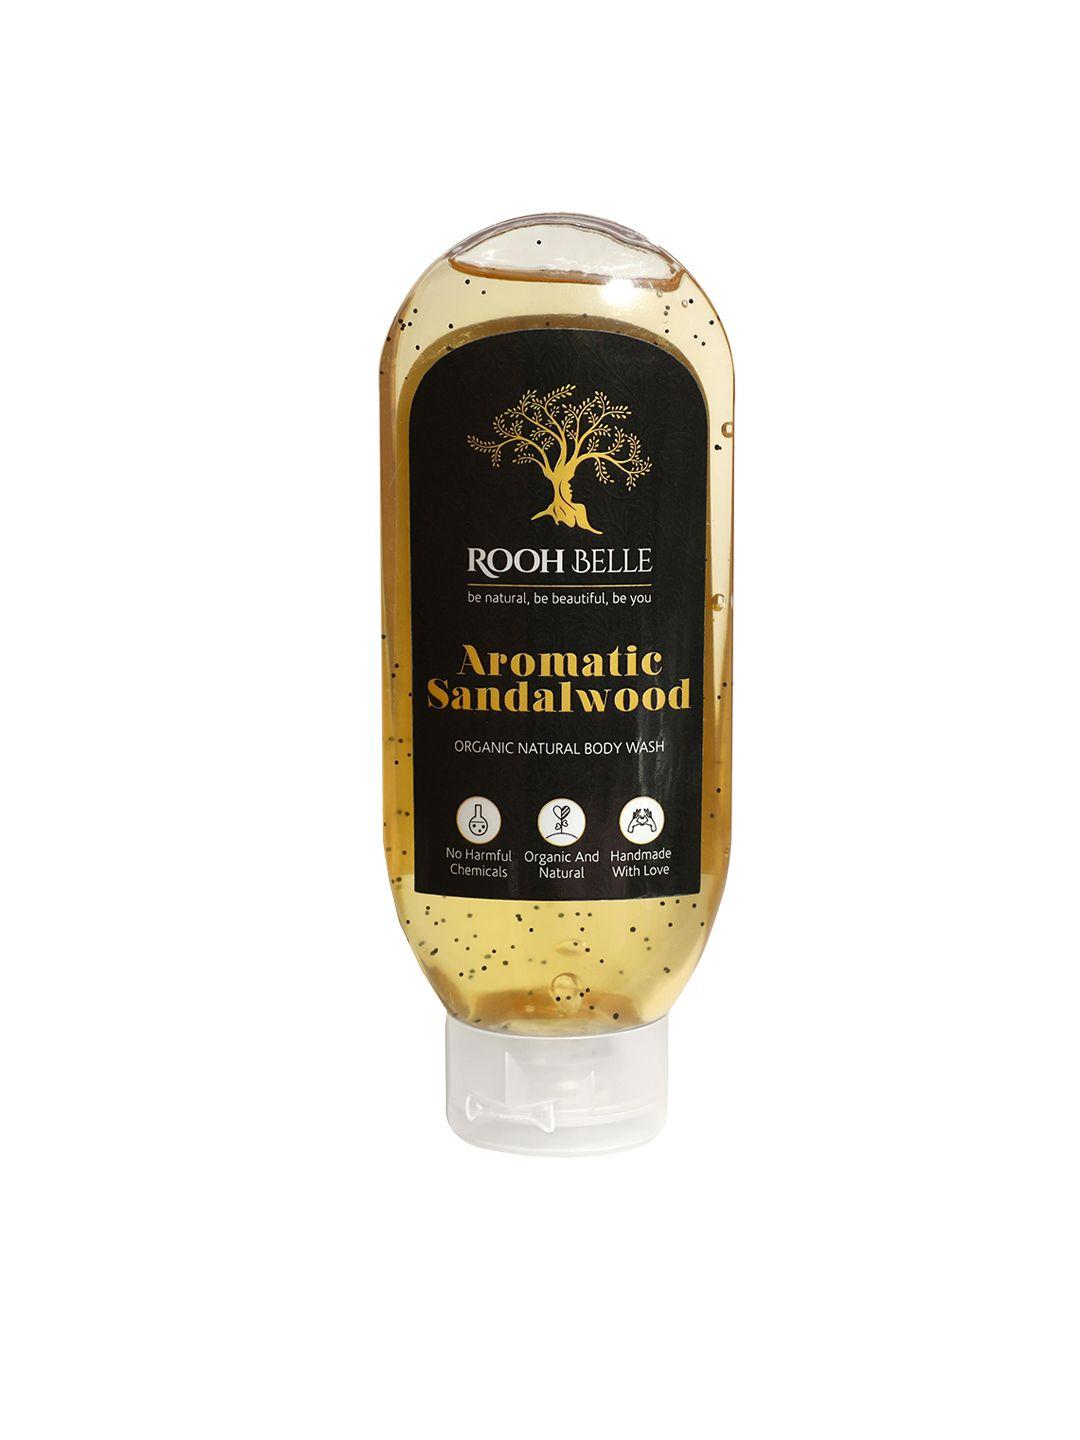 Roohbelle Aromatic Sandalwood Organic Natural Body Wash with Aloe Vera - 200ml